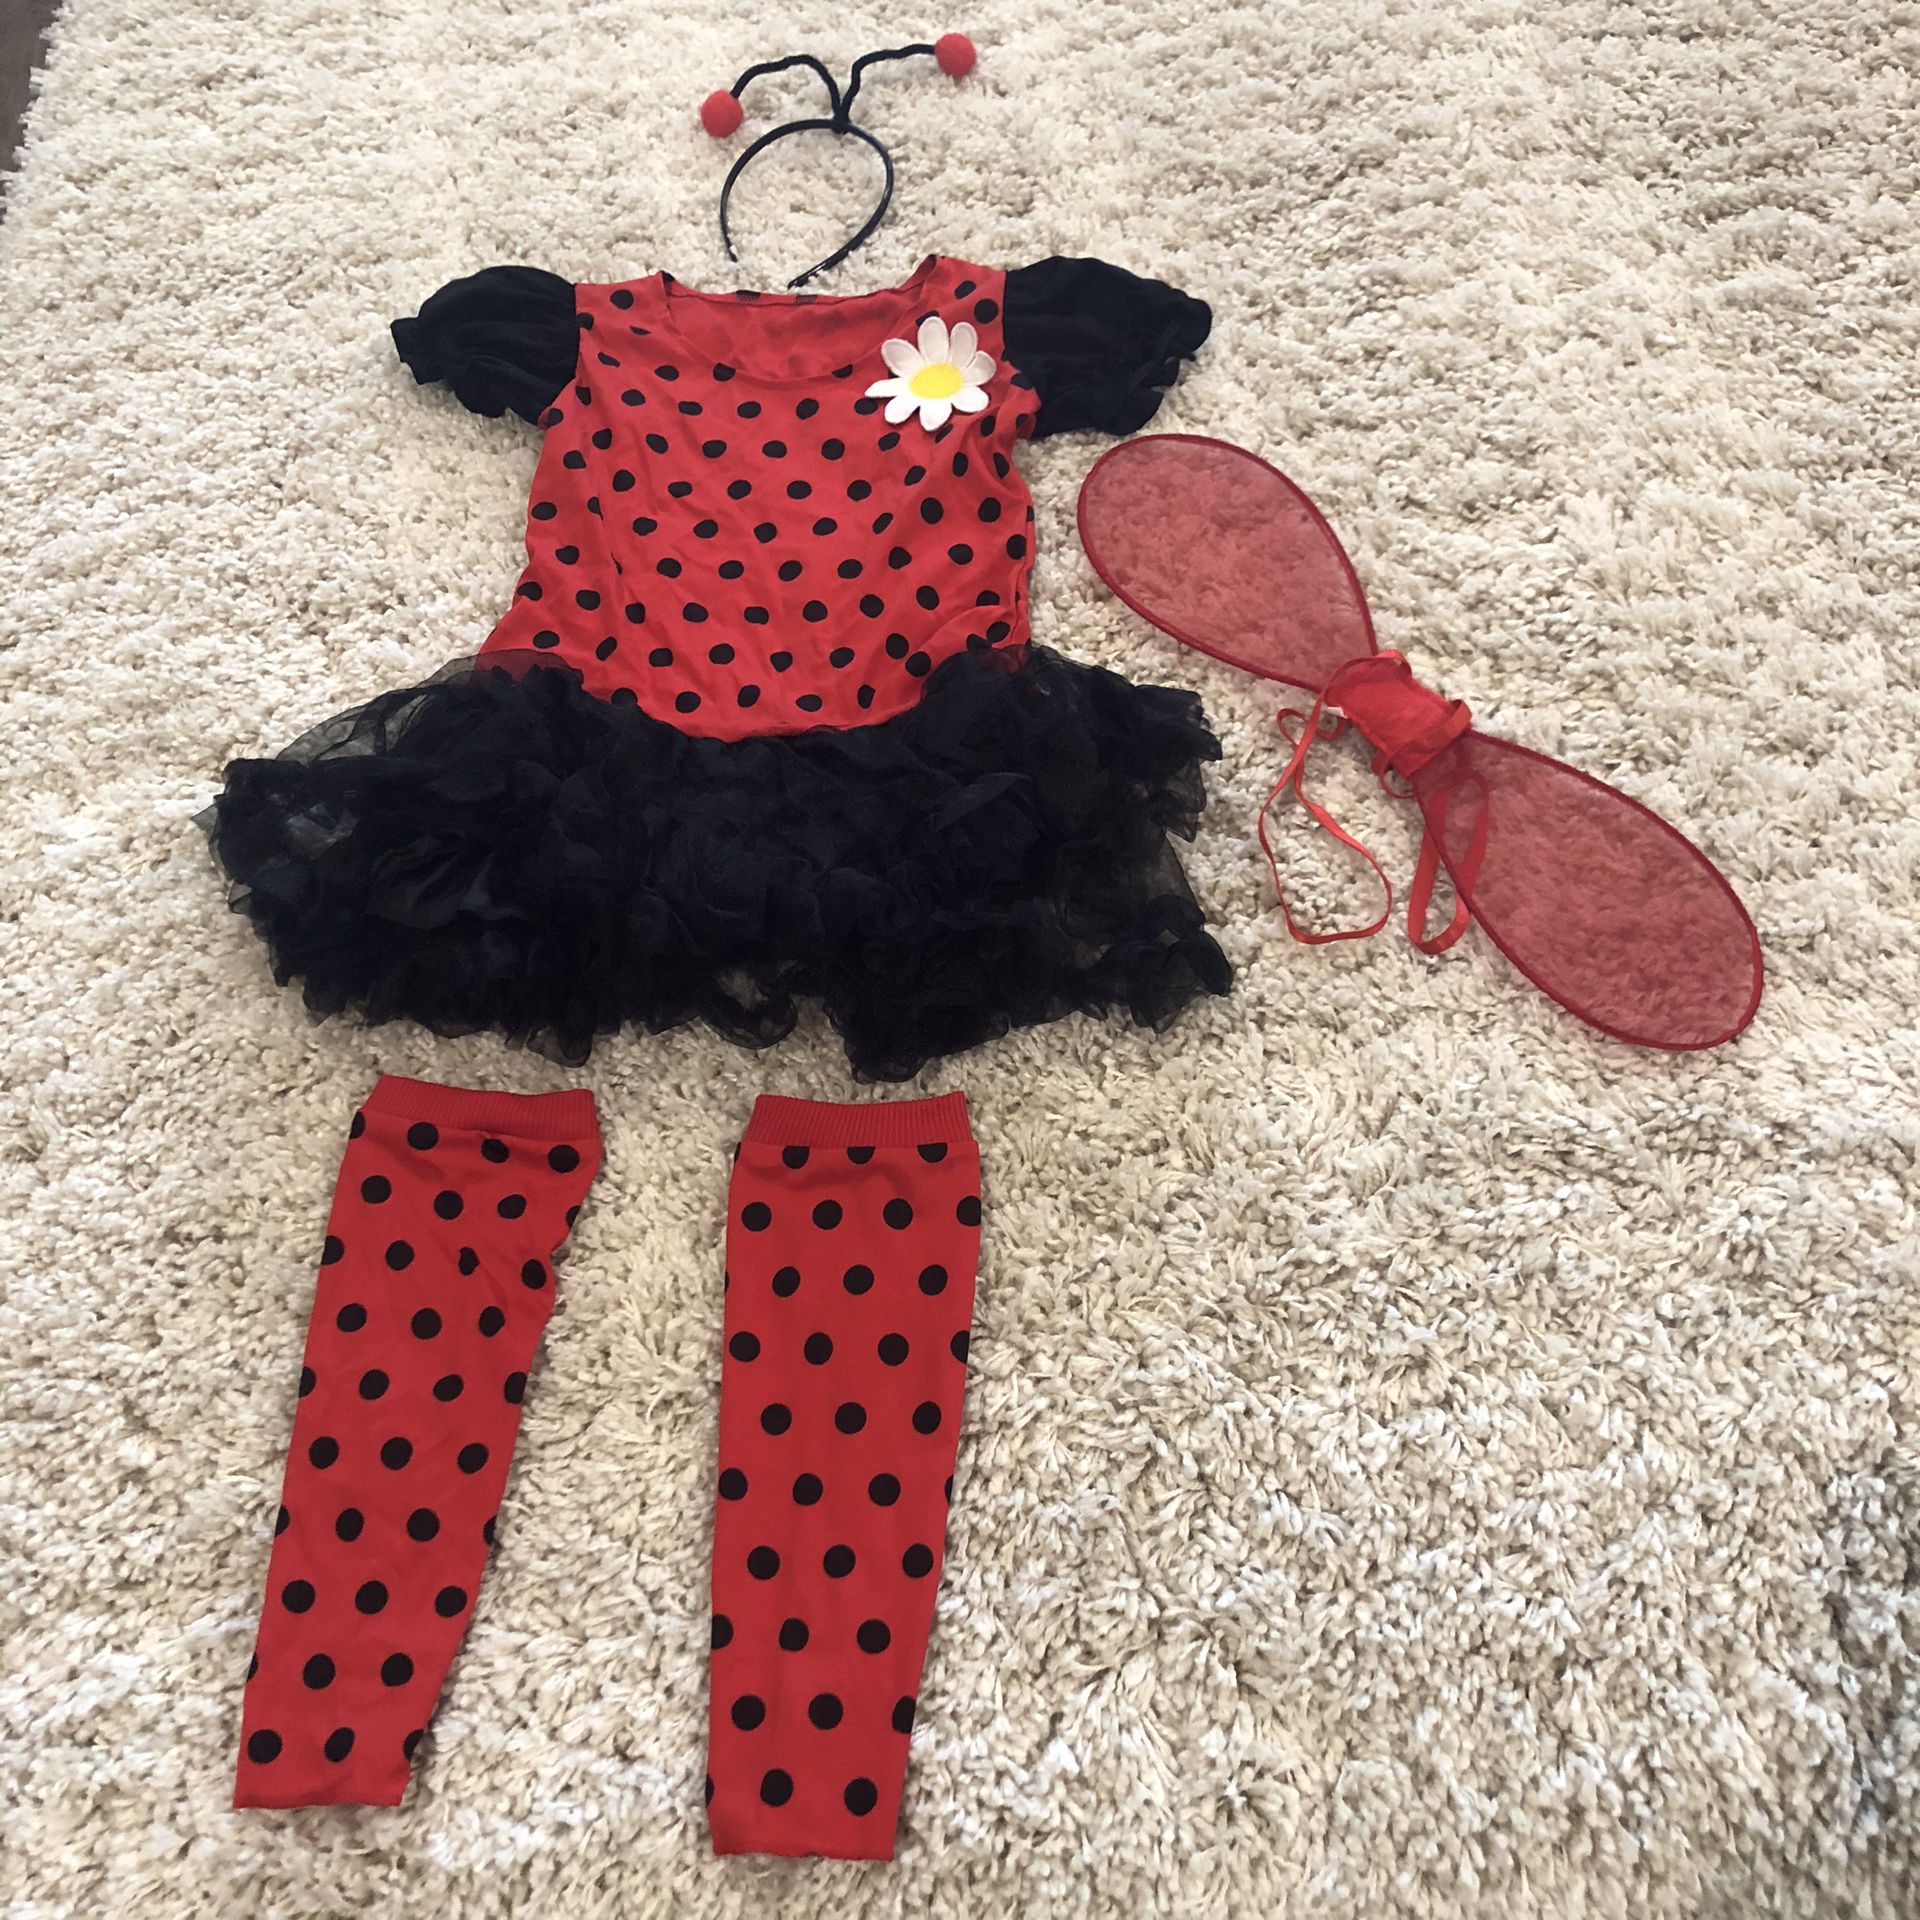 Daisy Bug Costume Child’s Size Medium